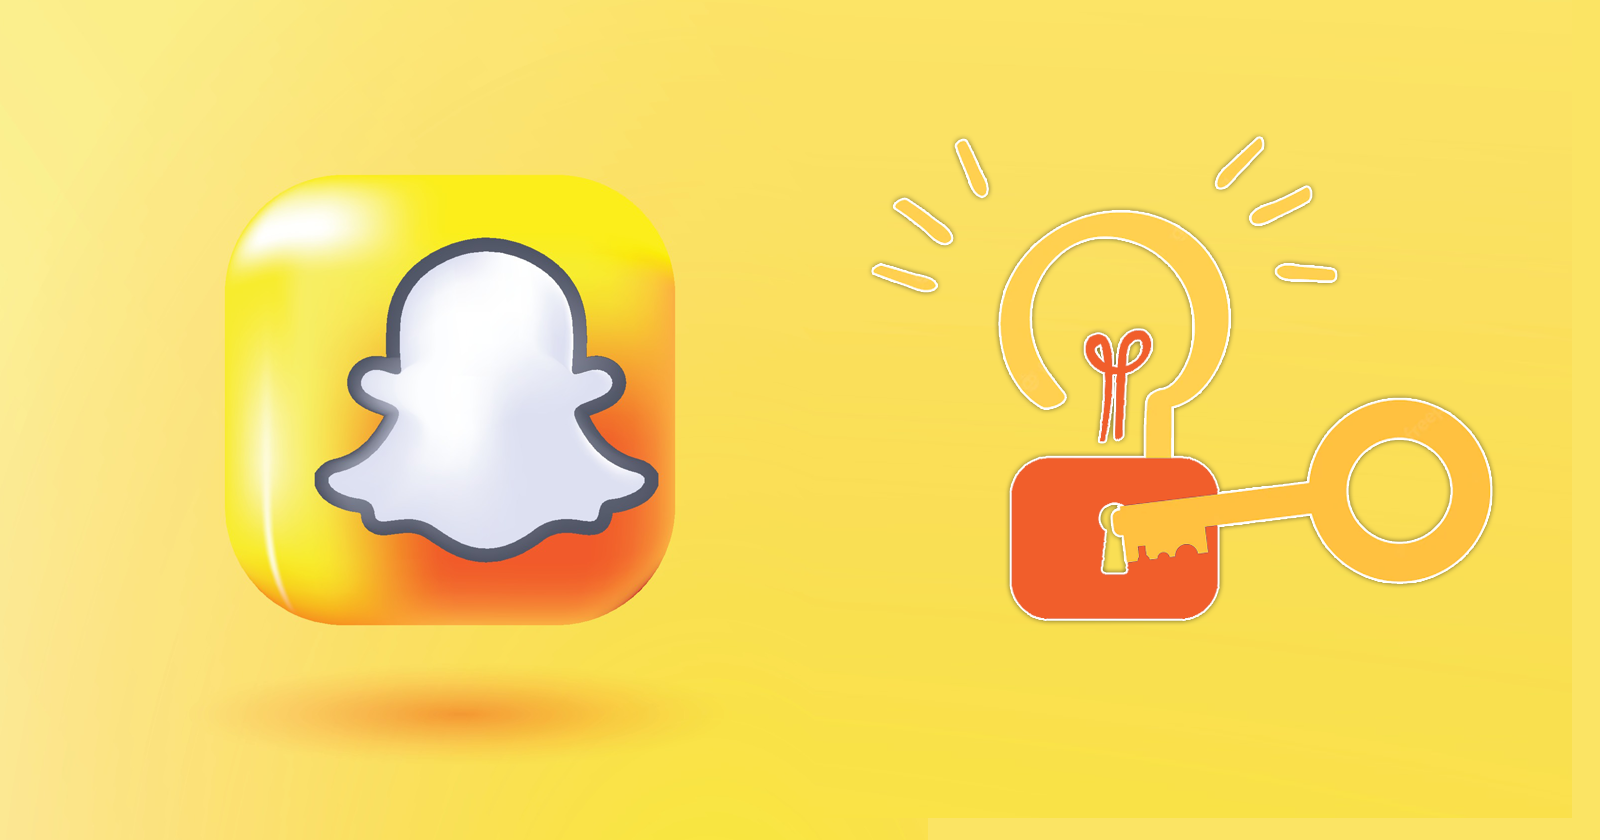 Unlock Snapchat Account in Simple Steps